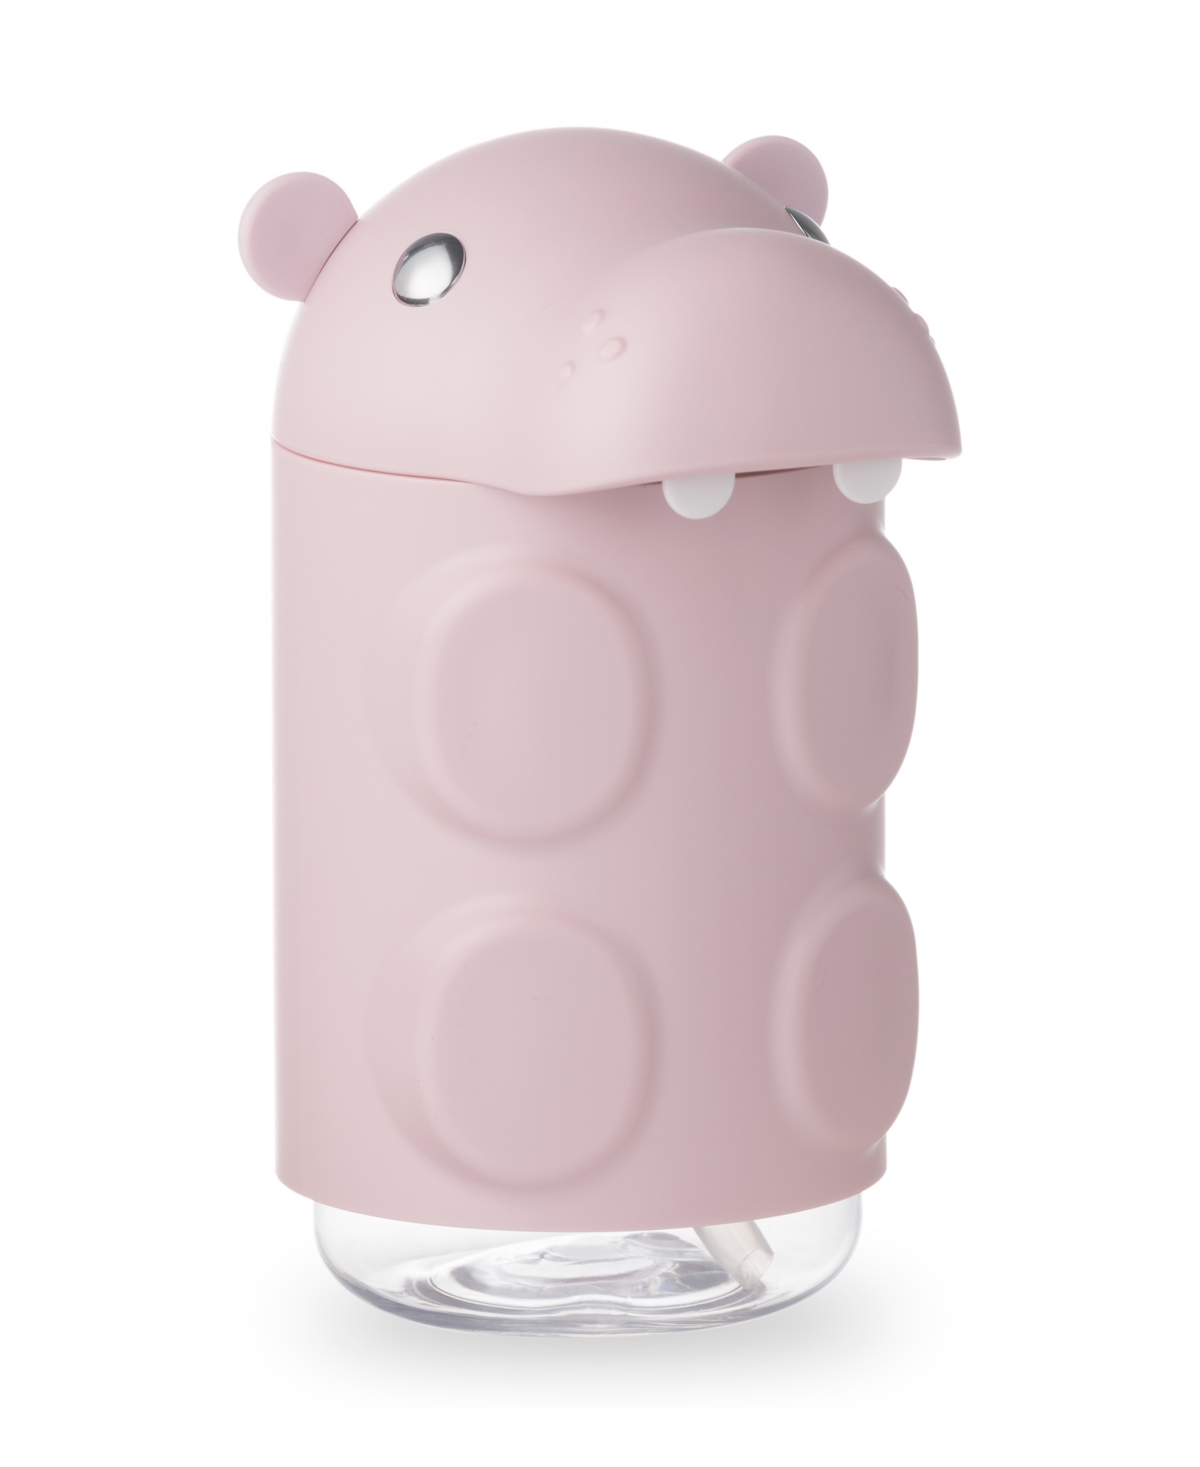 Soapbuds Hippo Soap Pump, 9 oz - Pink